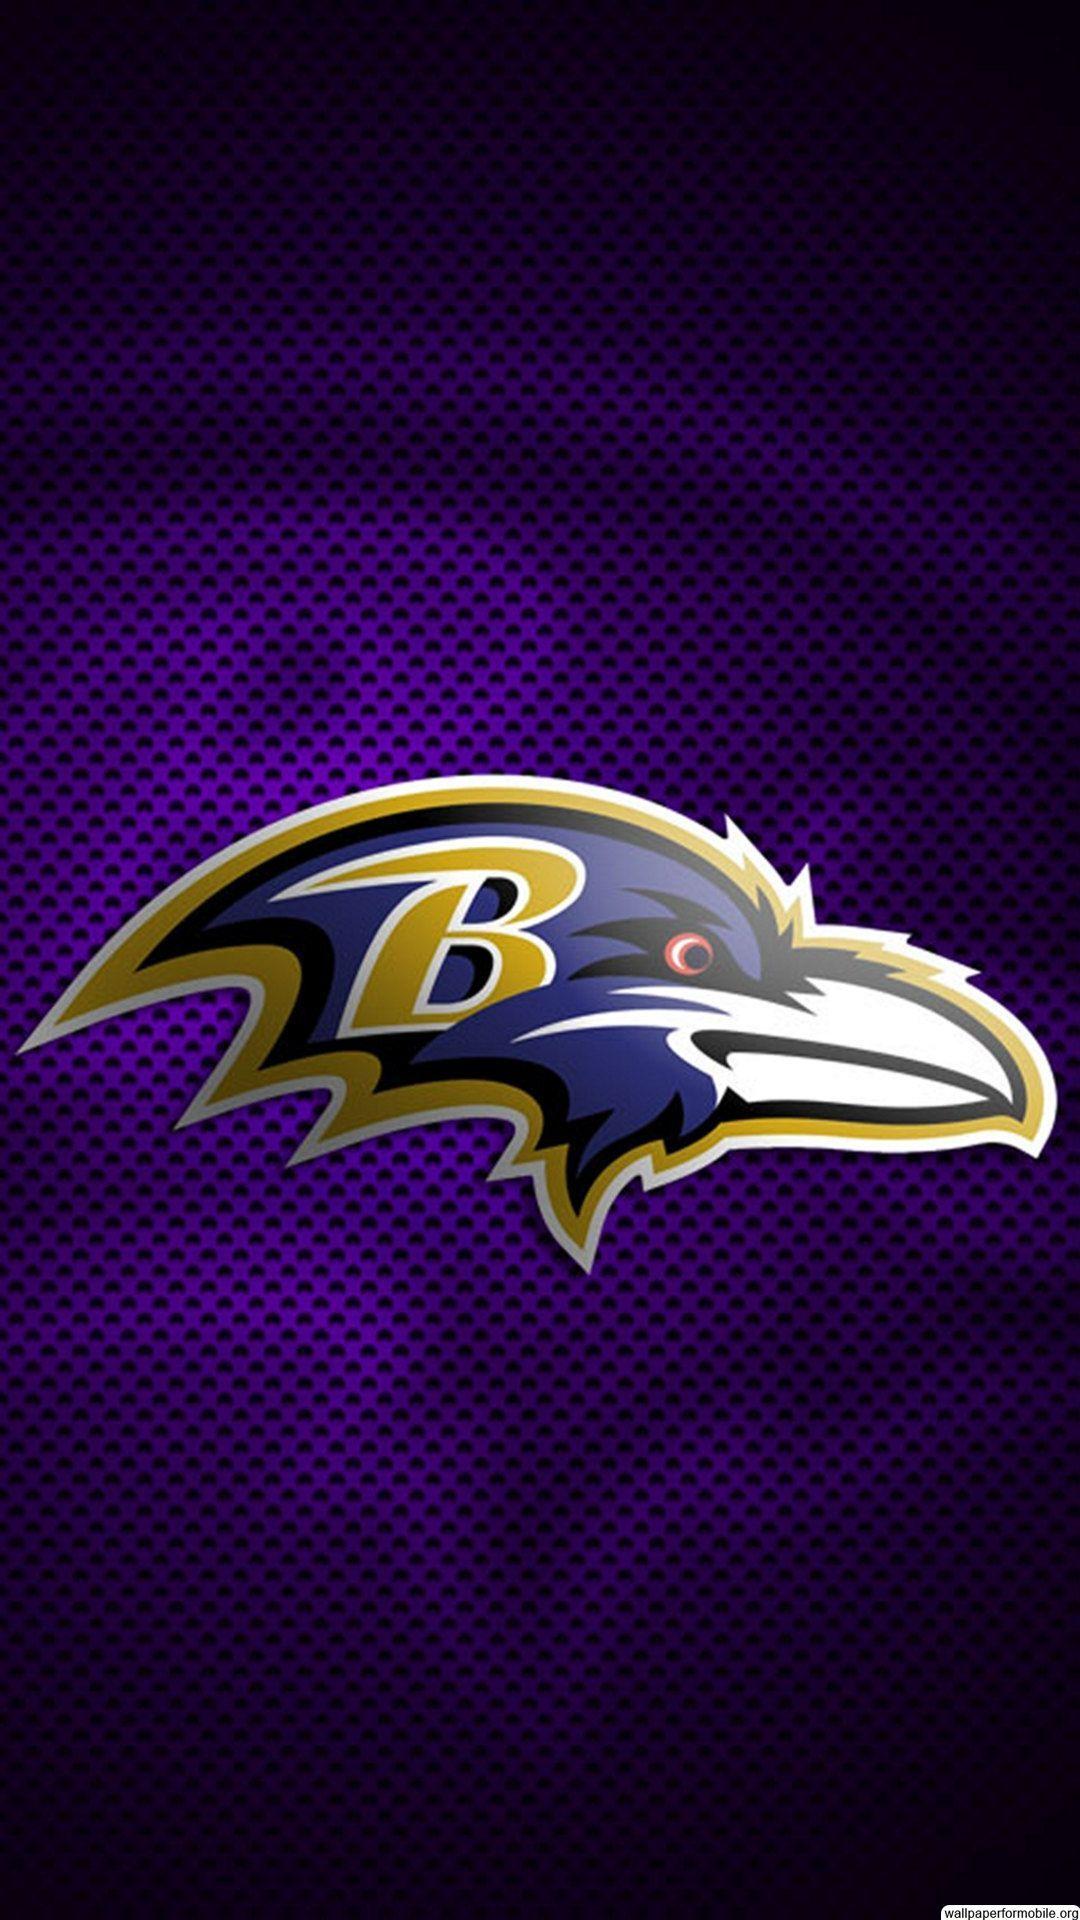 Ravens Logo - Pin by Blackbeauty426 on Baltimore Ravens | Baltimore Ravens ...